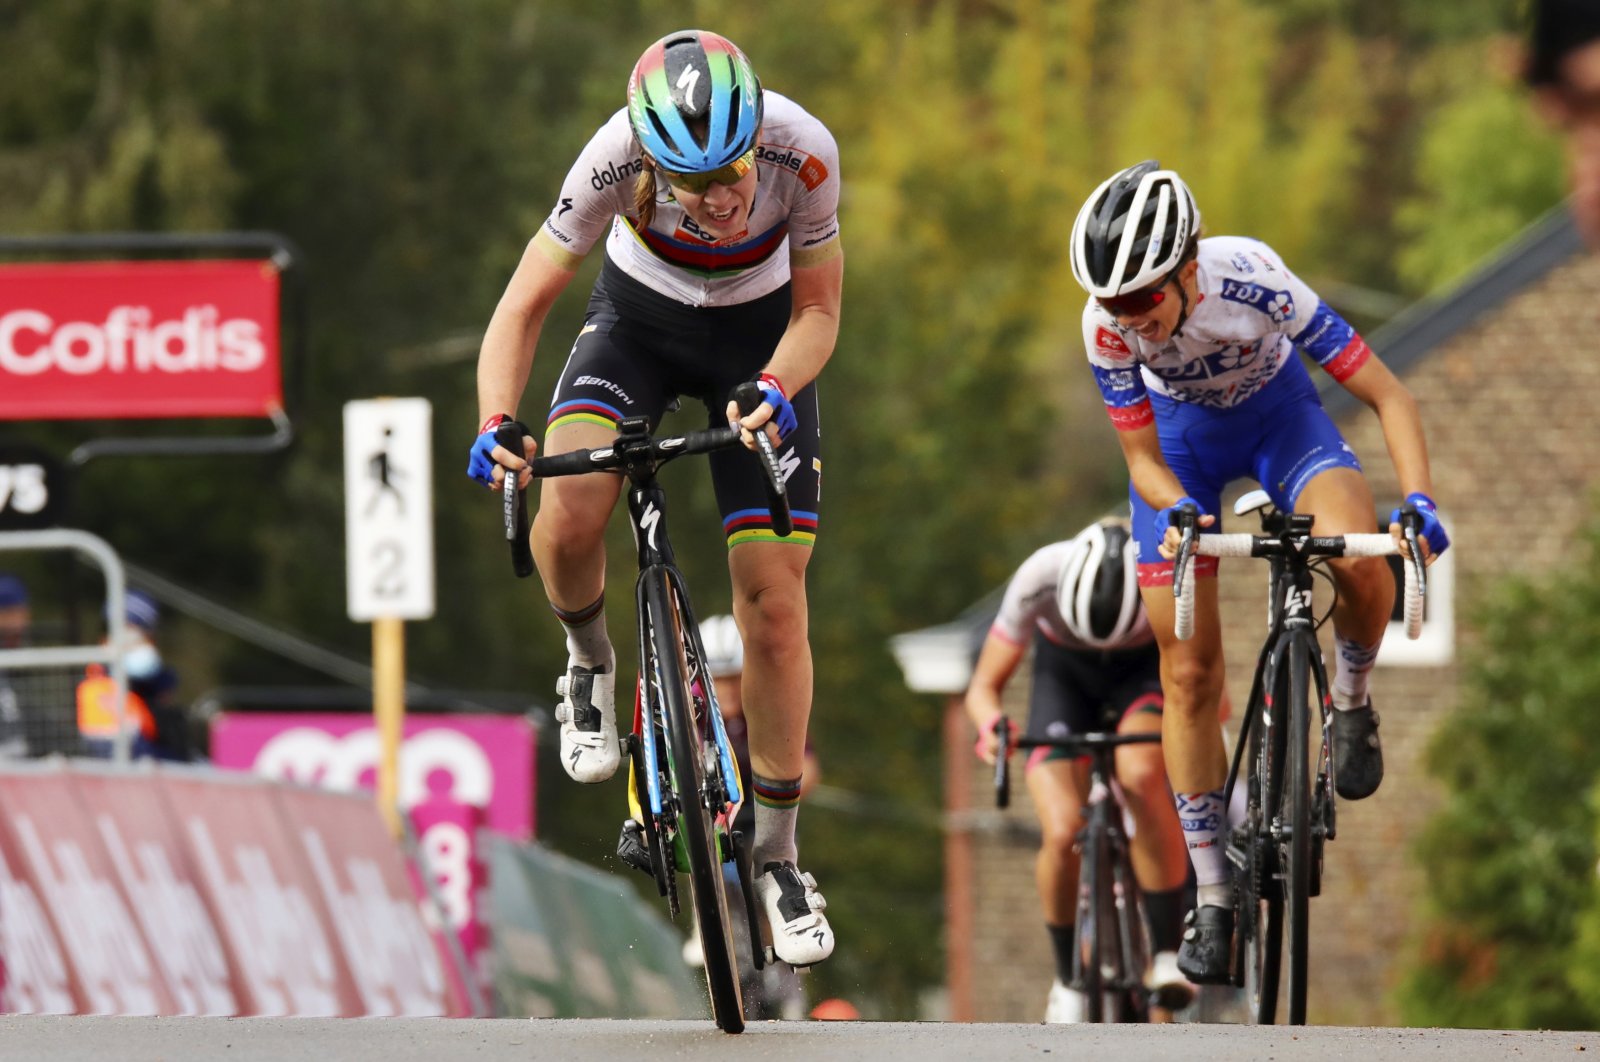 Anna Van Der Breggen (L) in action during the women's UCI World Tour race Fleche Wallonne, in Huy, Belgium, Sept. 30, 2020. (AP Photo)